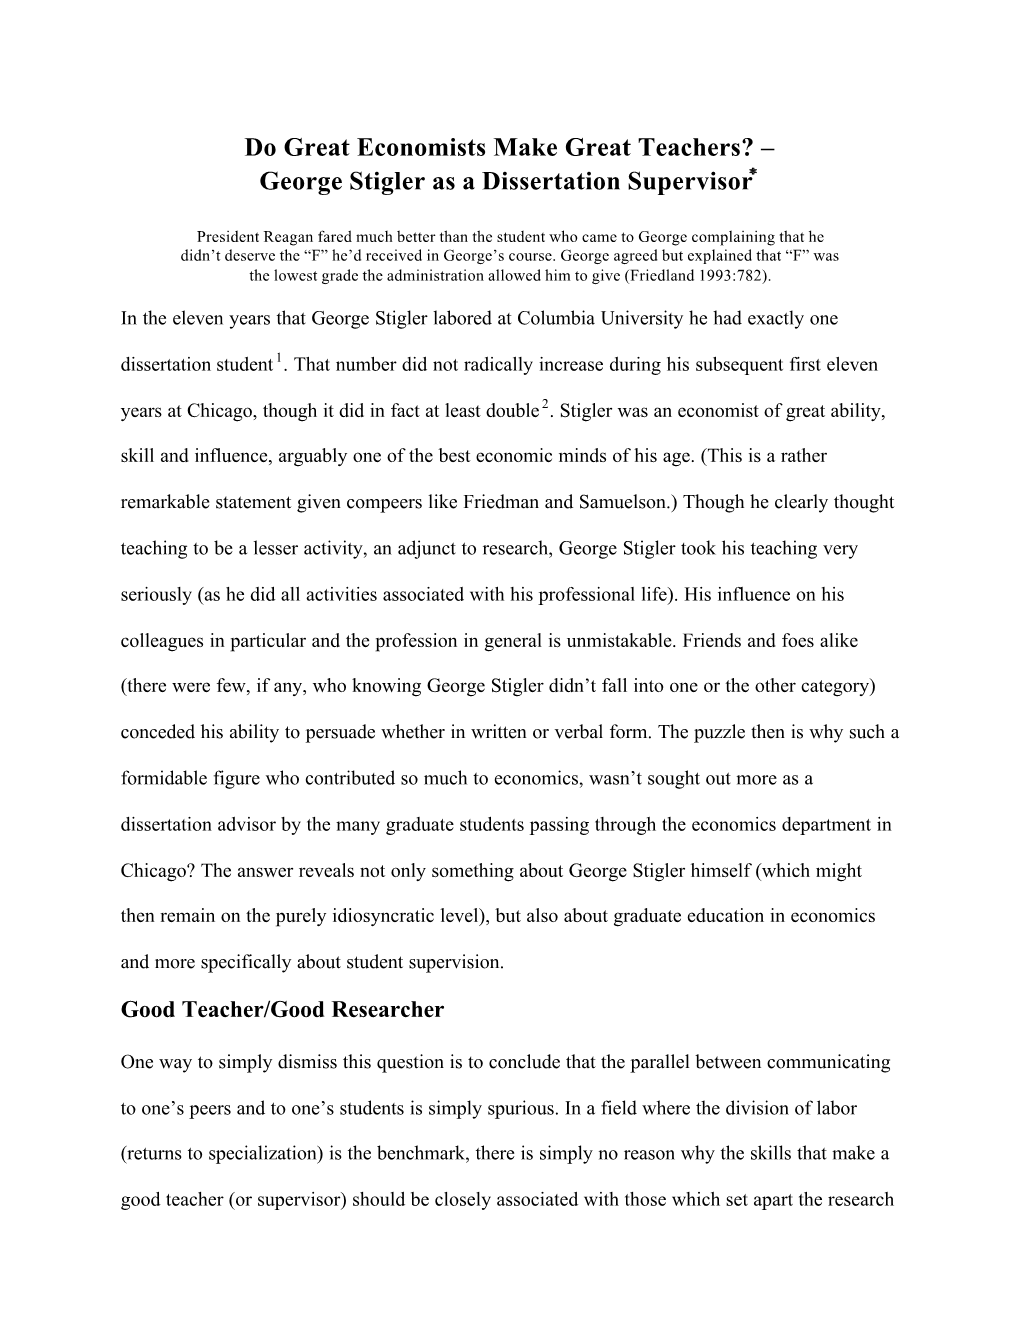 George Stigler As a Dissertation Supervisor*